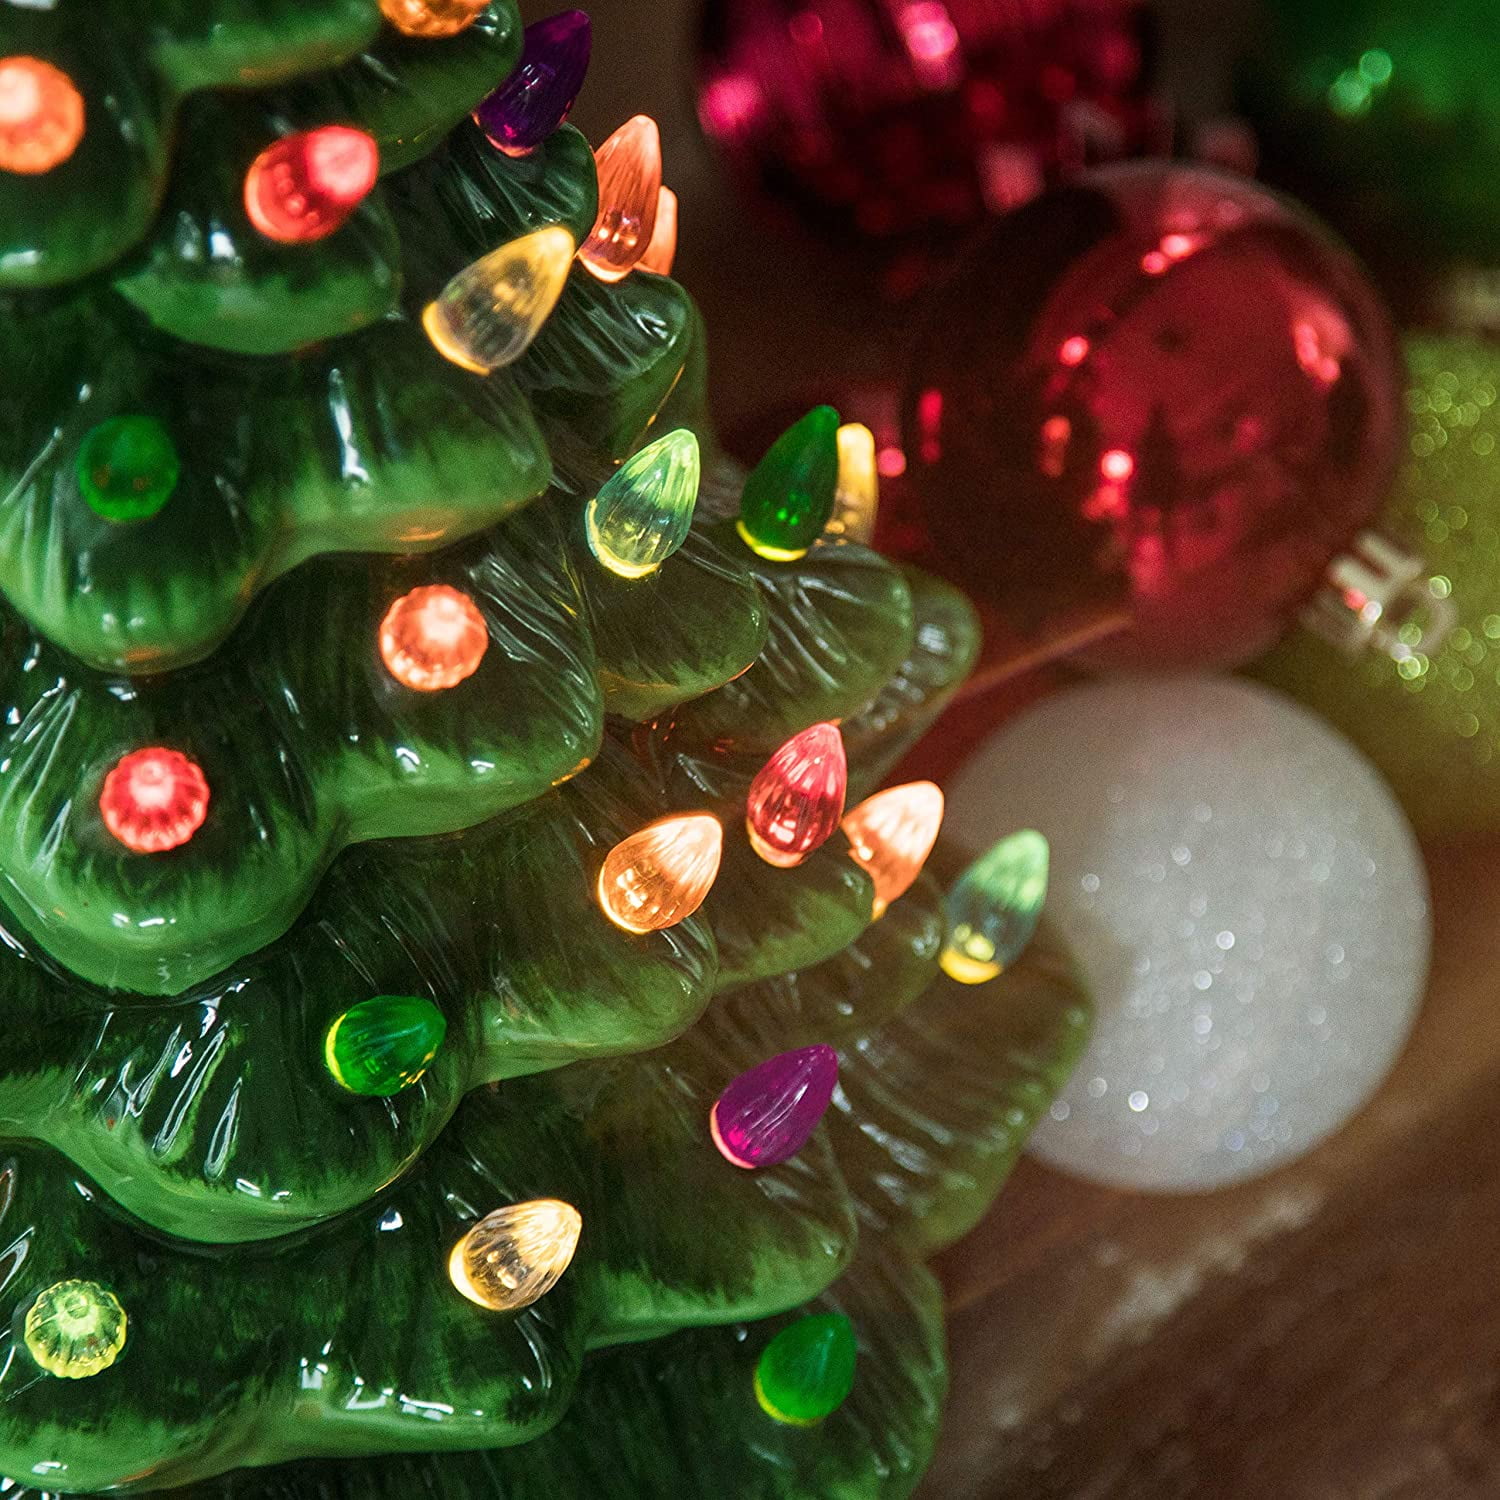 15-Inch Animated Ceramic LED Light Up Christmas Tree Figurine w/ Rotat -  One Holiday Way